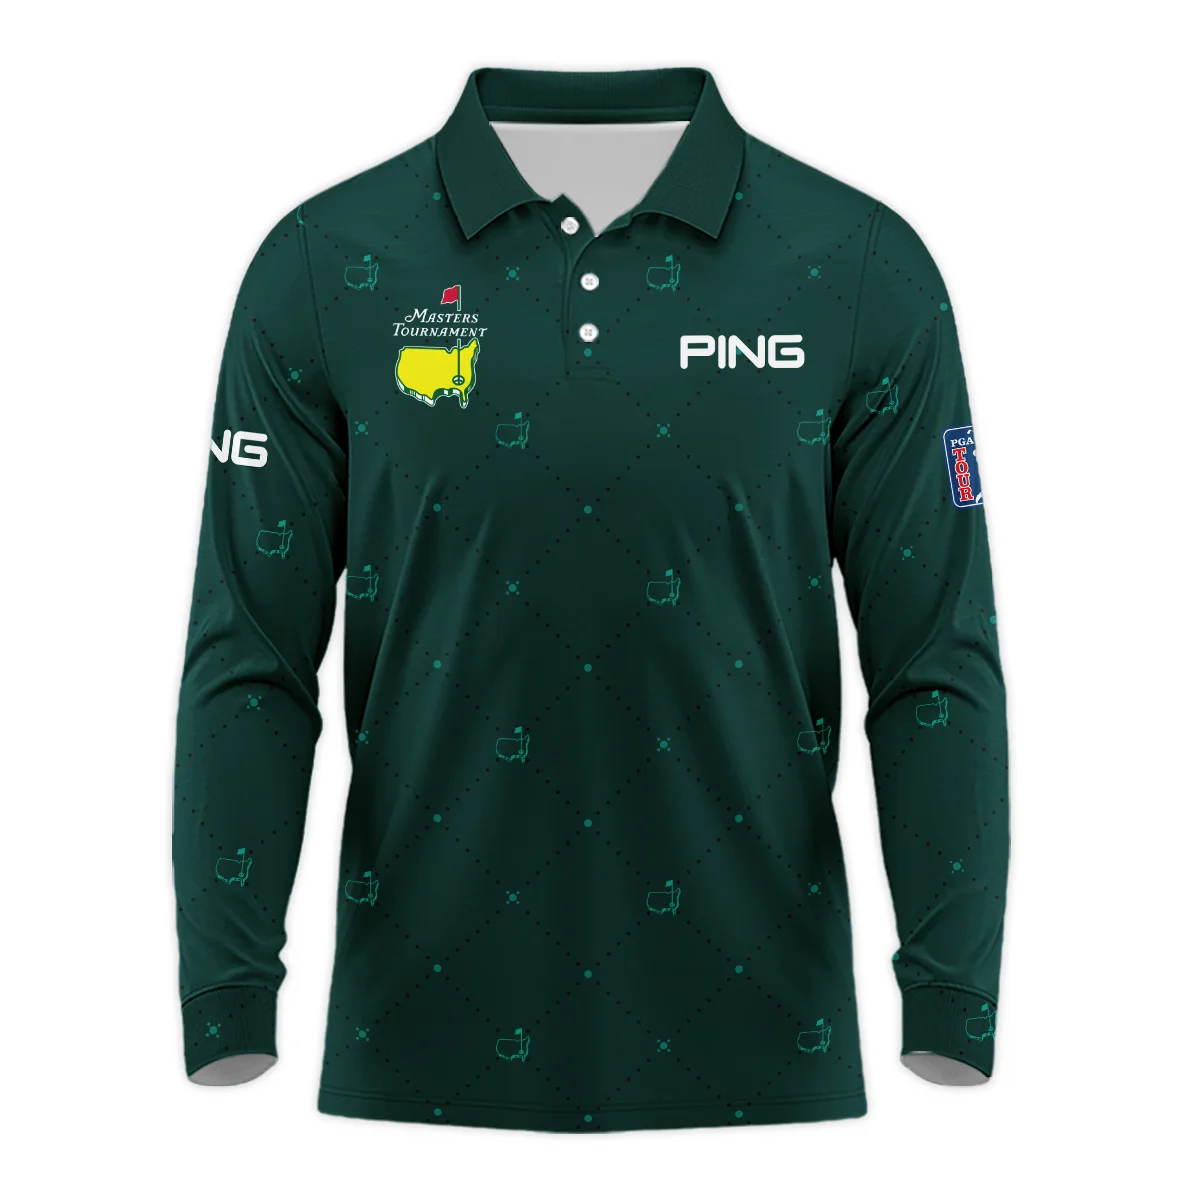 Dark Green Pattern In Retro Style With Logo Masters Tournament Ping Sleeveless Jacket Style Classic Sleeveless Jacket